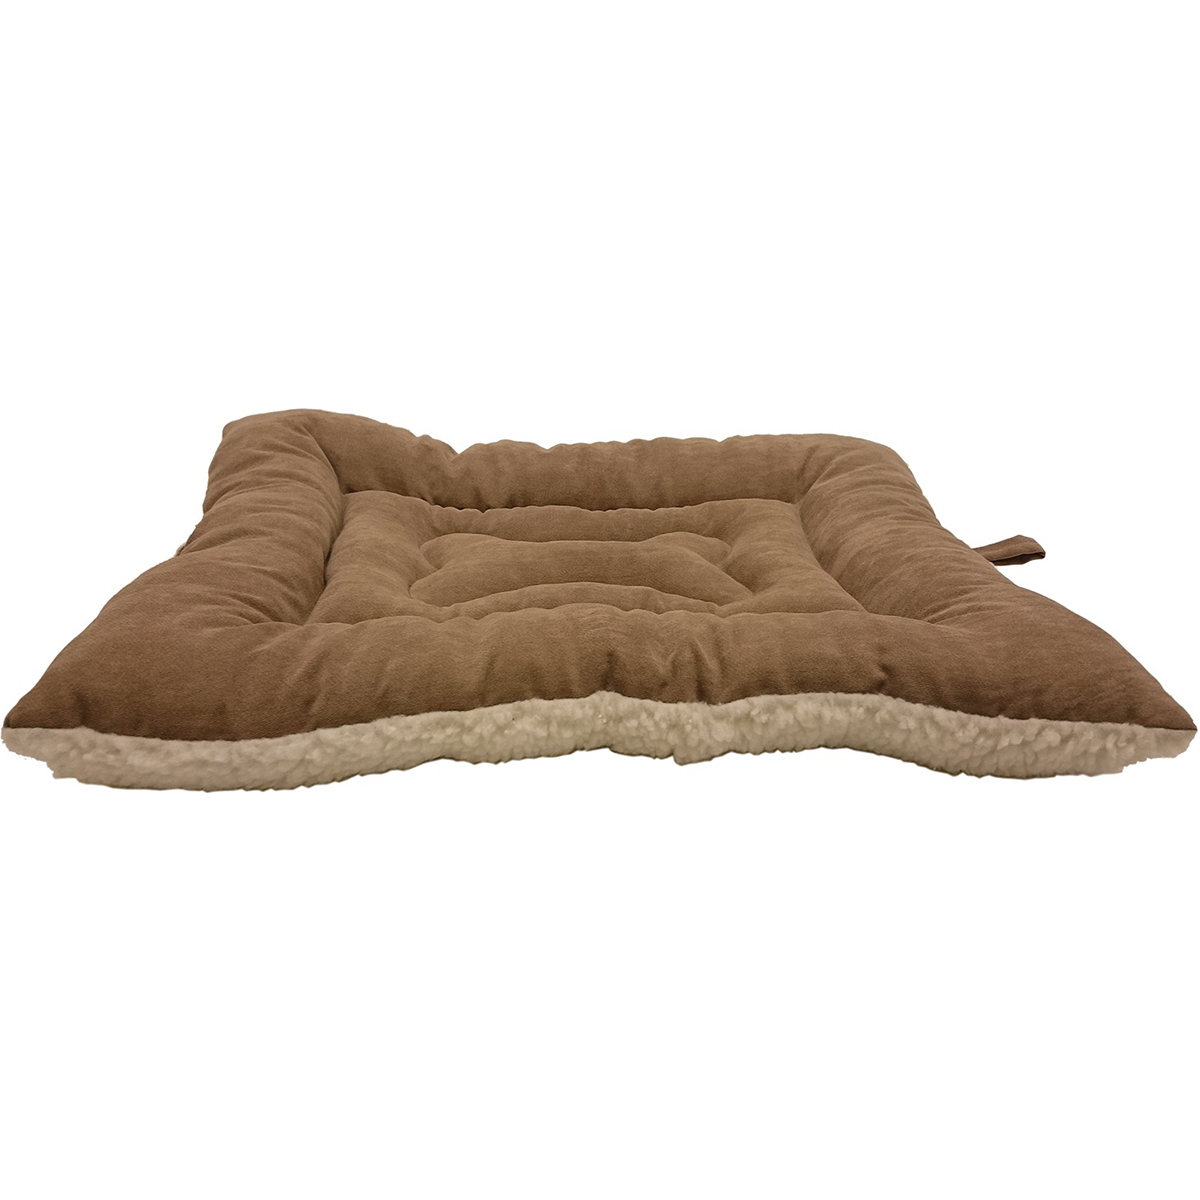 32865 Caramel Sleep Zone Fashion Pet Bed & Crate Mat